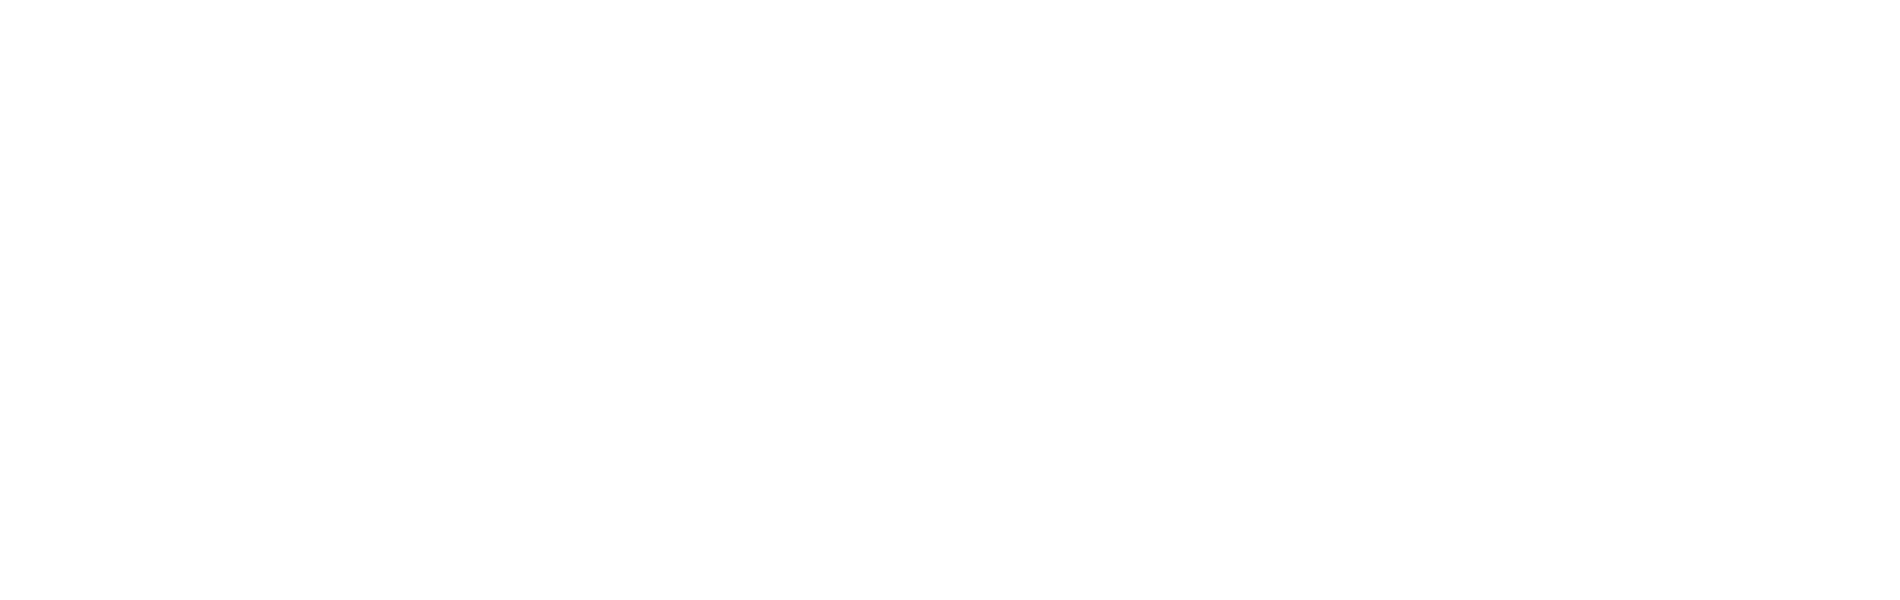 banner_metal_techno